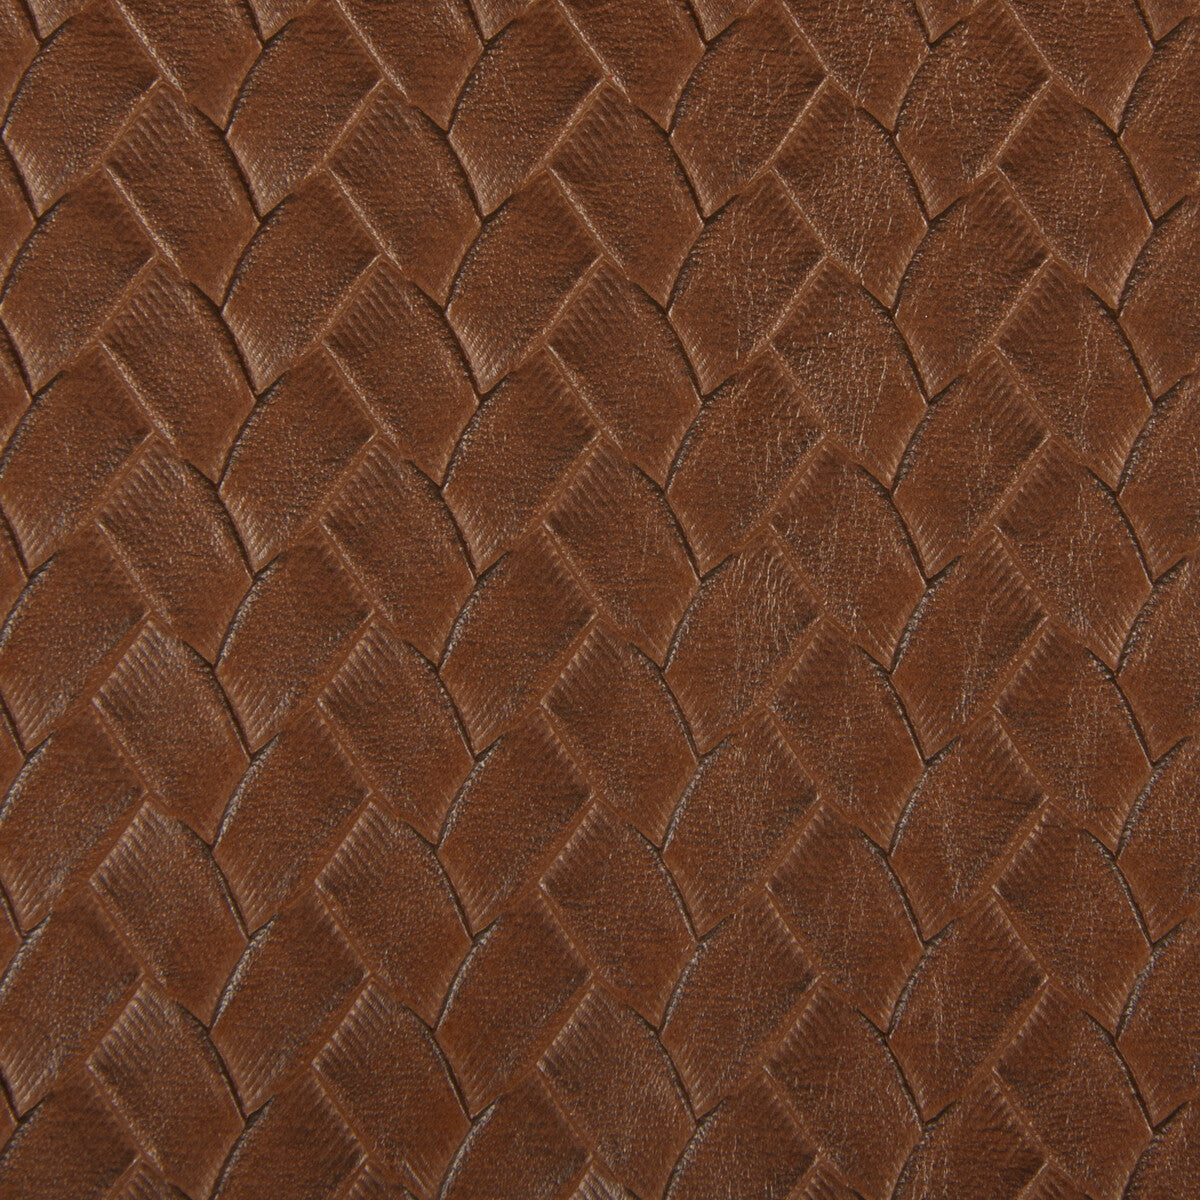 Kravet Design fabric in verlaine-6 color - pattern VERLAINE.6.0 - by Kravet Design